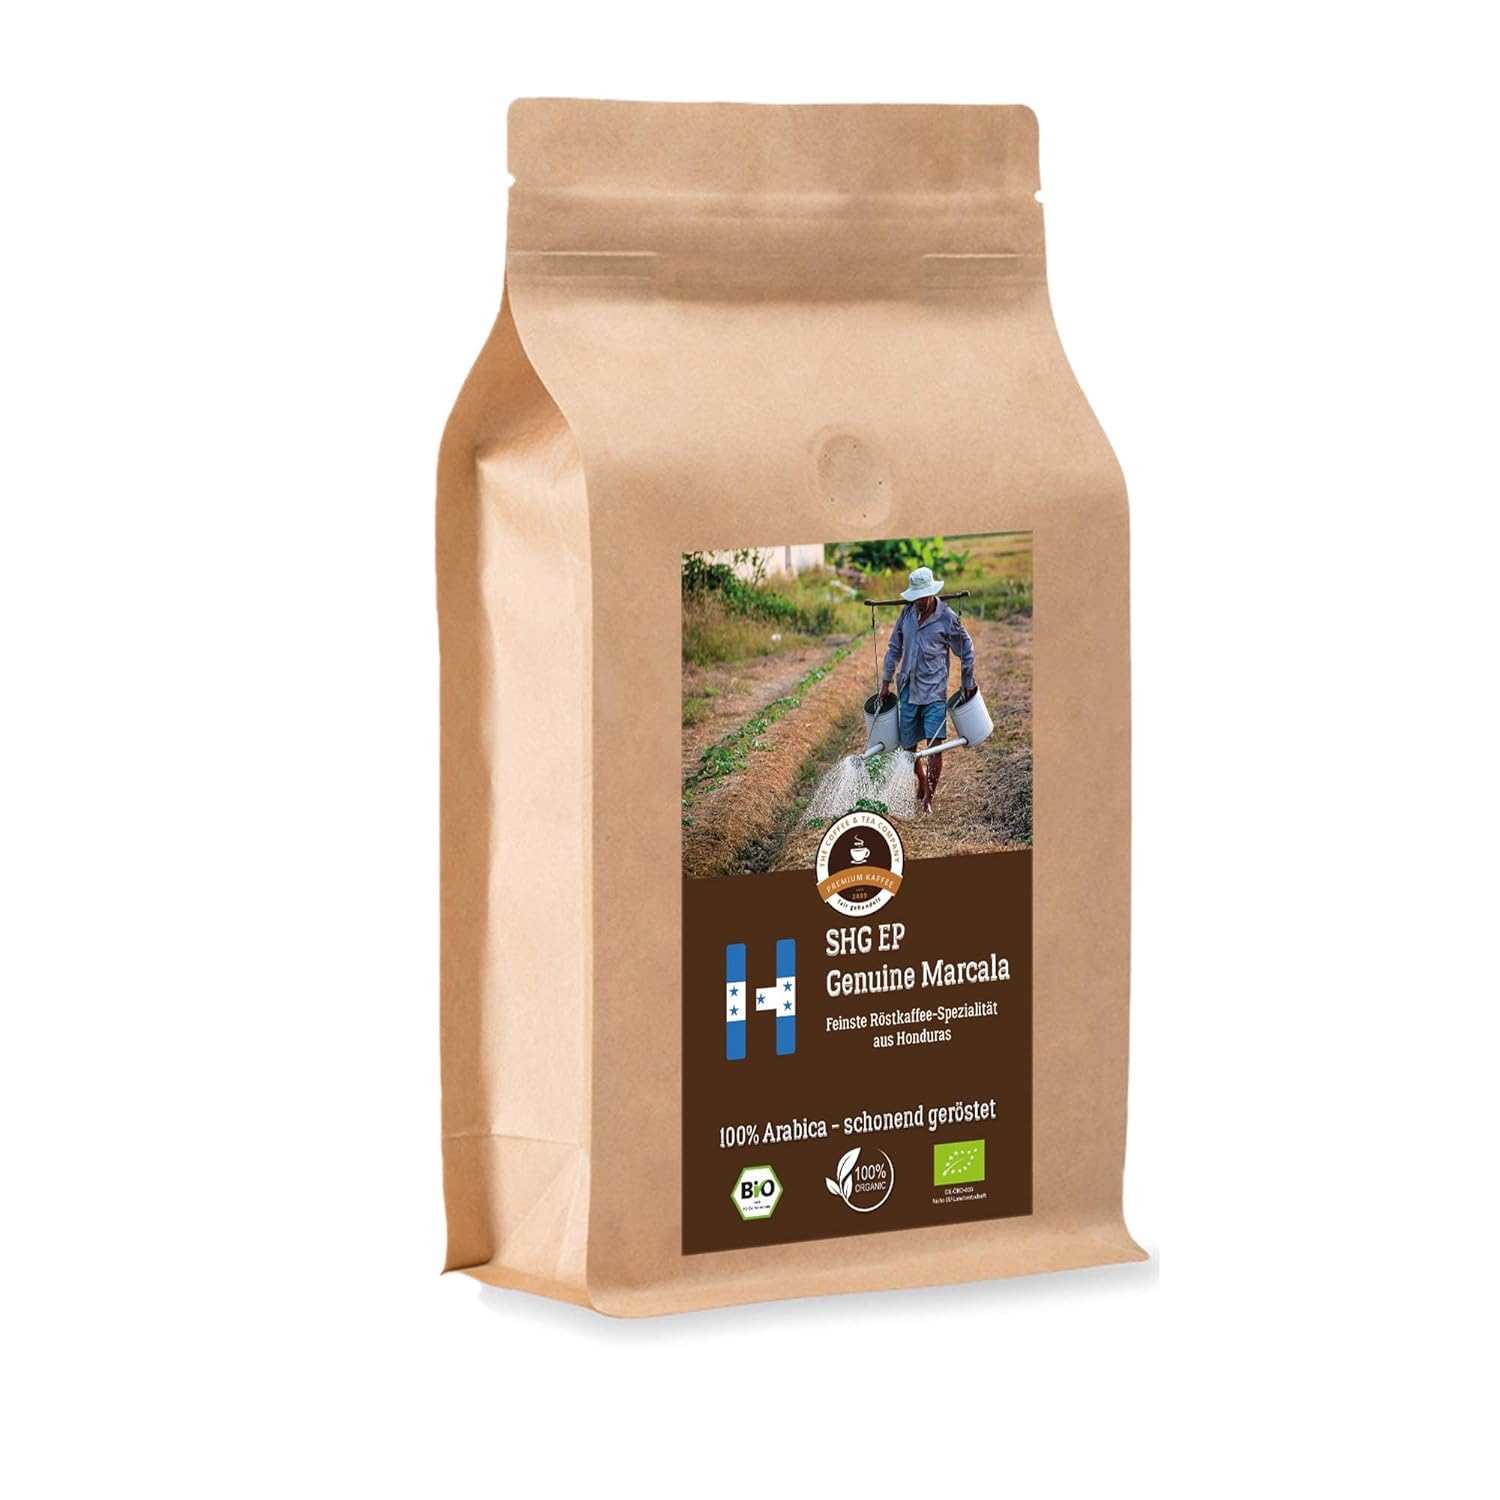 Coffee Globetrotter - Organic Honduras Genuine Marcala - 200 g Medium Ground - for Coffee Filter Machine, Hand Filter - Top Coffee - Roasted Coffee from Organic Cultivation